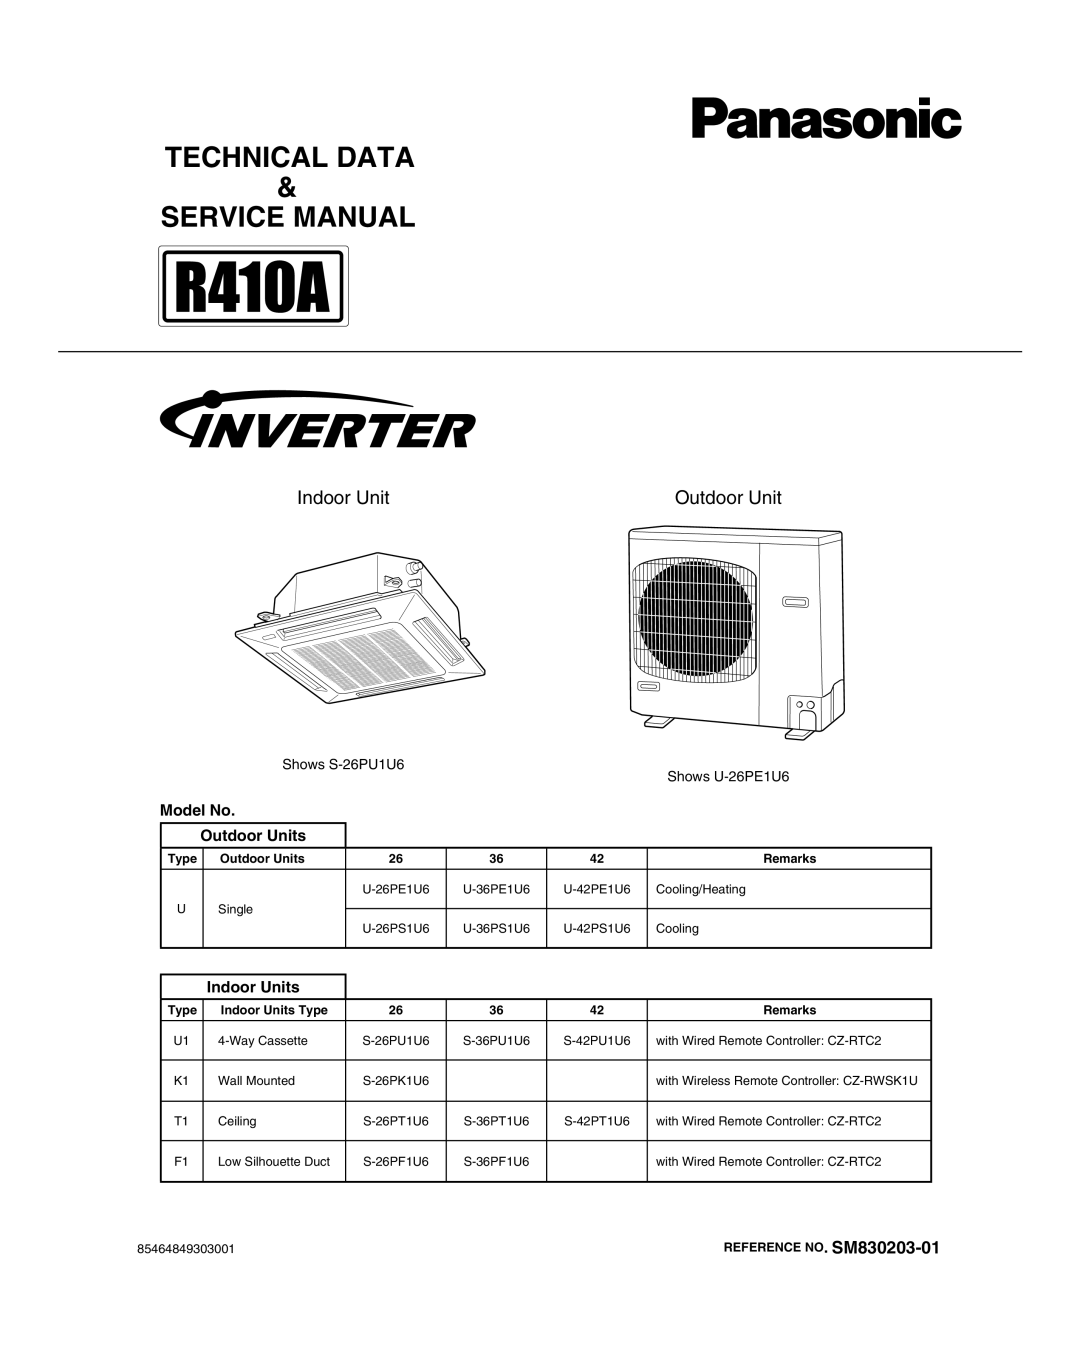 Panasonic R410A service manual Technical Data & Service Manual, Model No, Outdoor Units, Indoor Units 